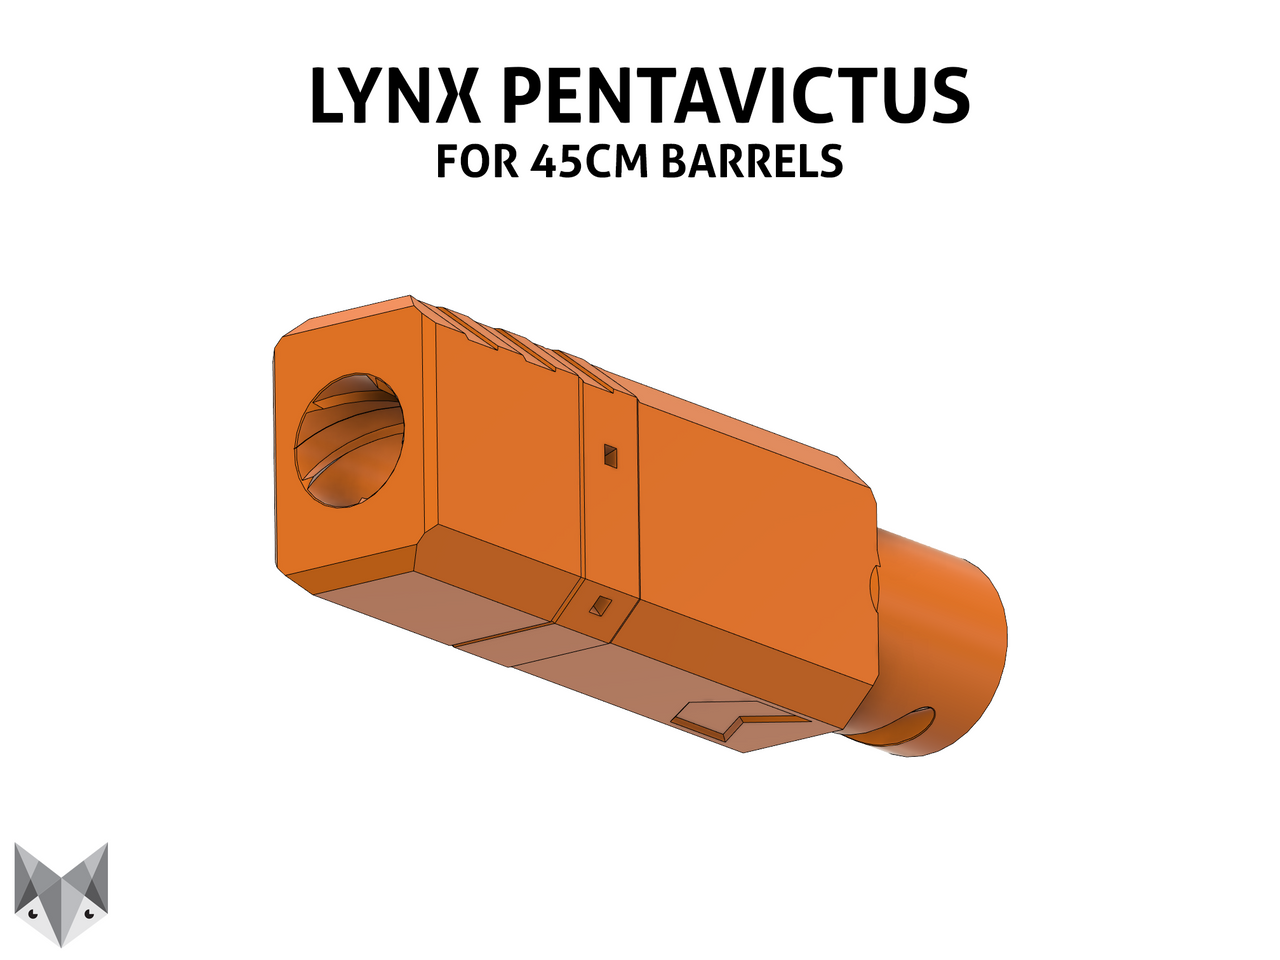 Lynx - Pentavictus Scar Barrel (45cm Barrel) by Thanh